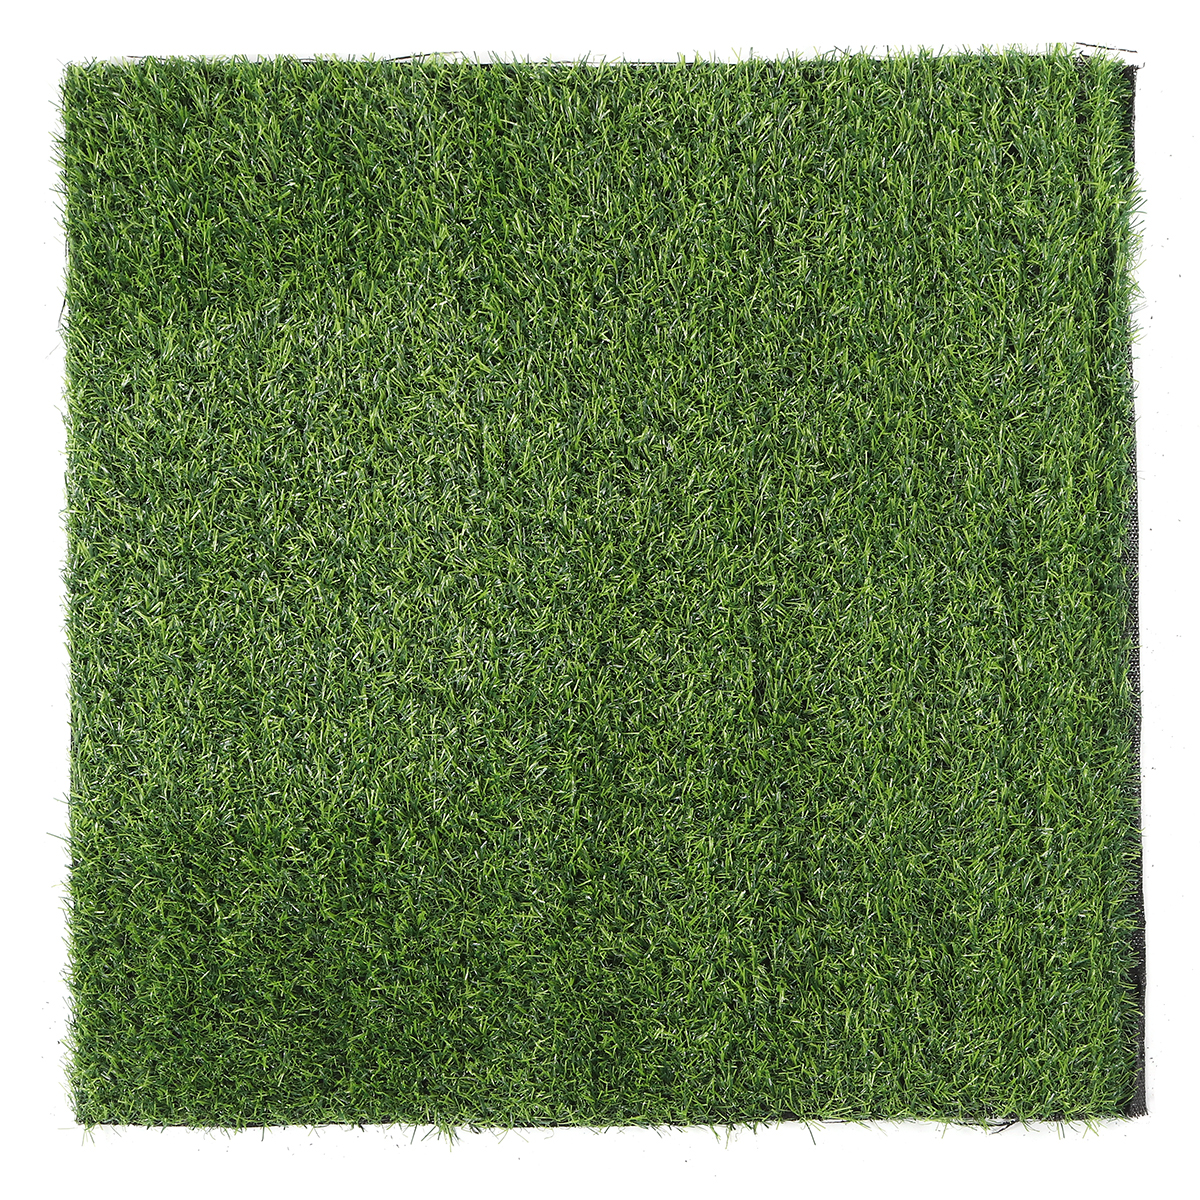 Artificial-Grass-Lawn-Turf-Encryption-Synthetic-Plastic-Plant-Garden-Decor-1709158-4